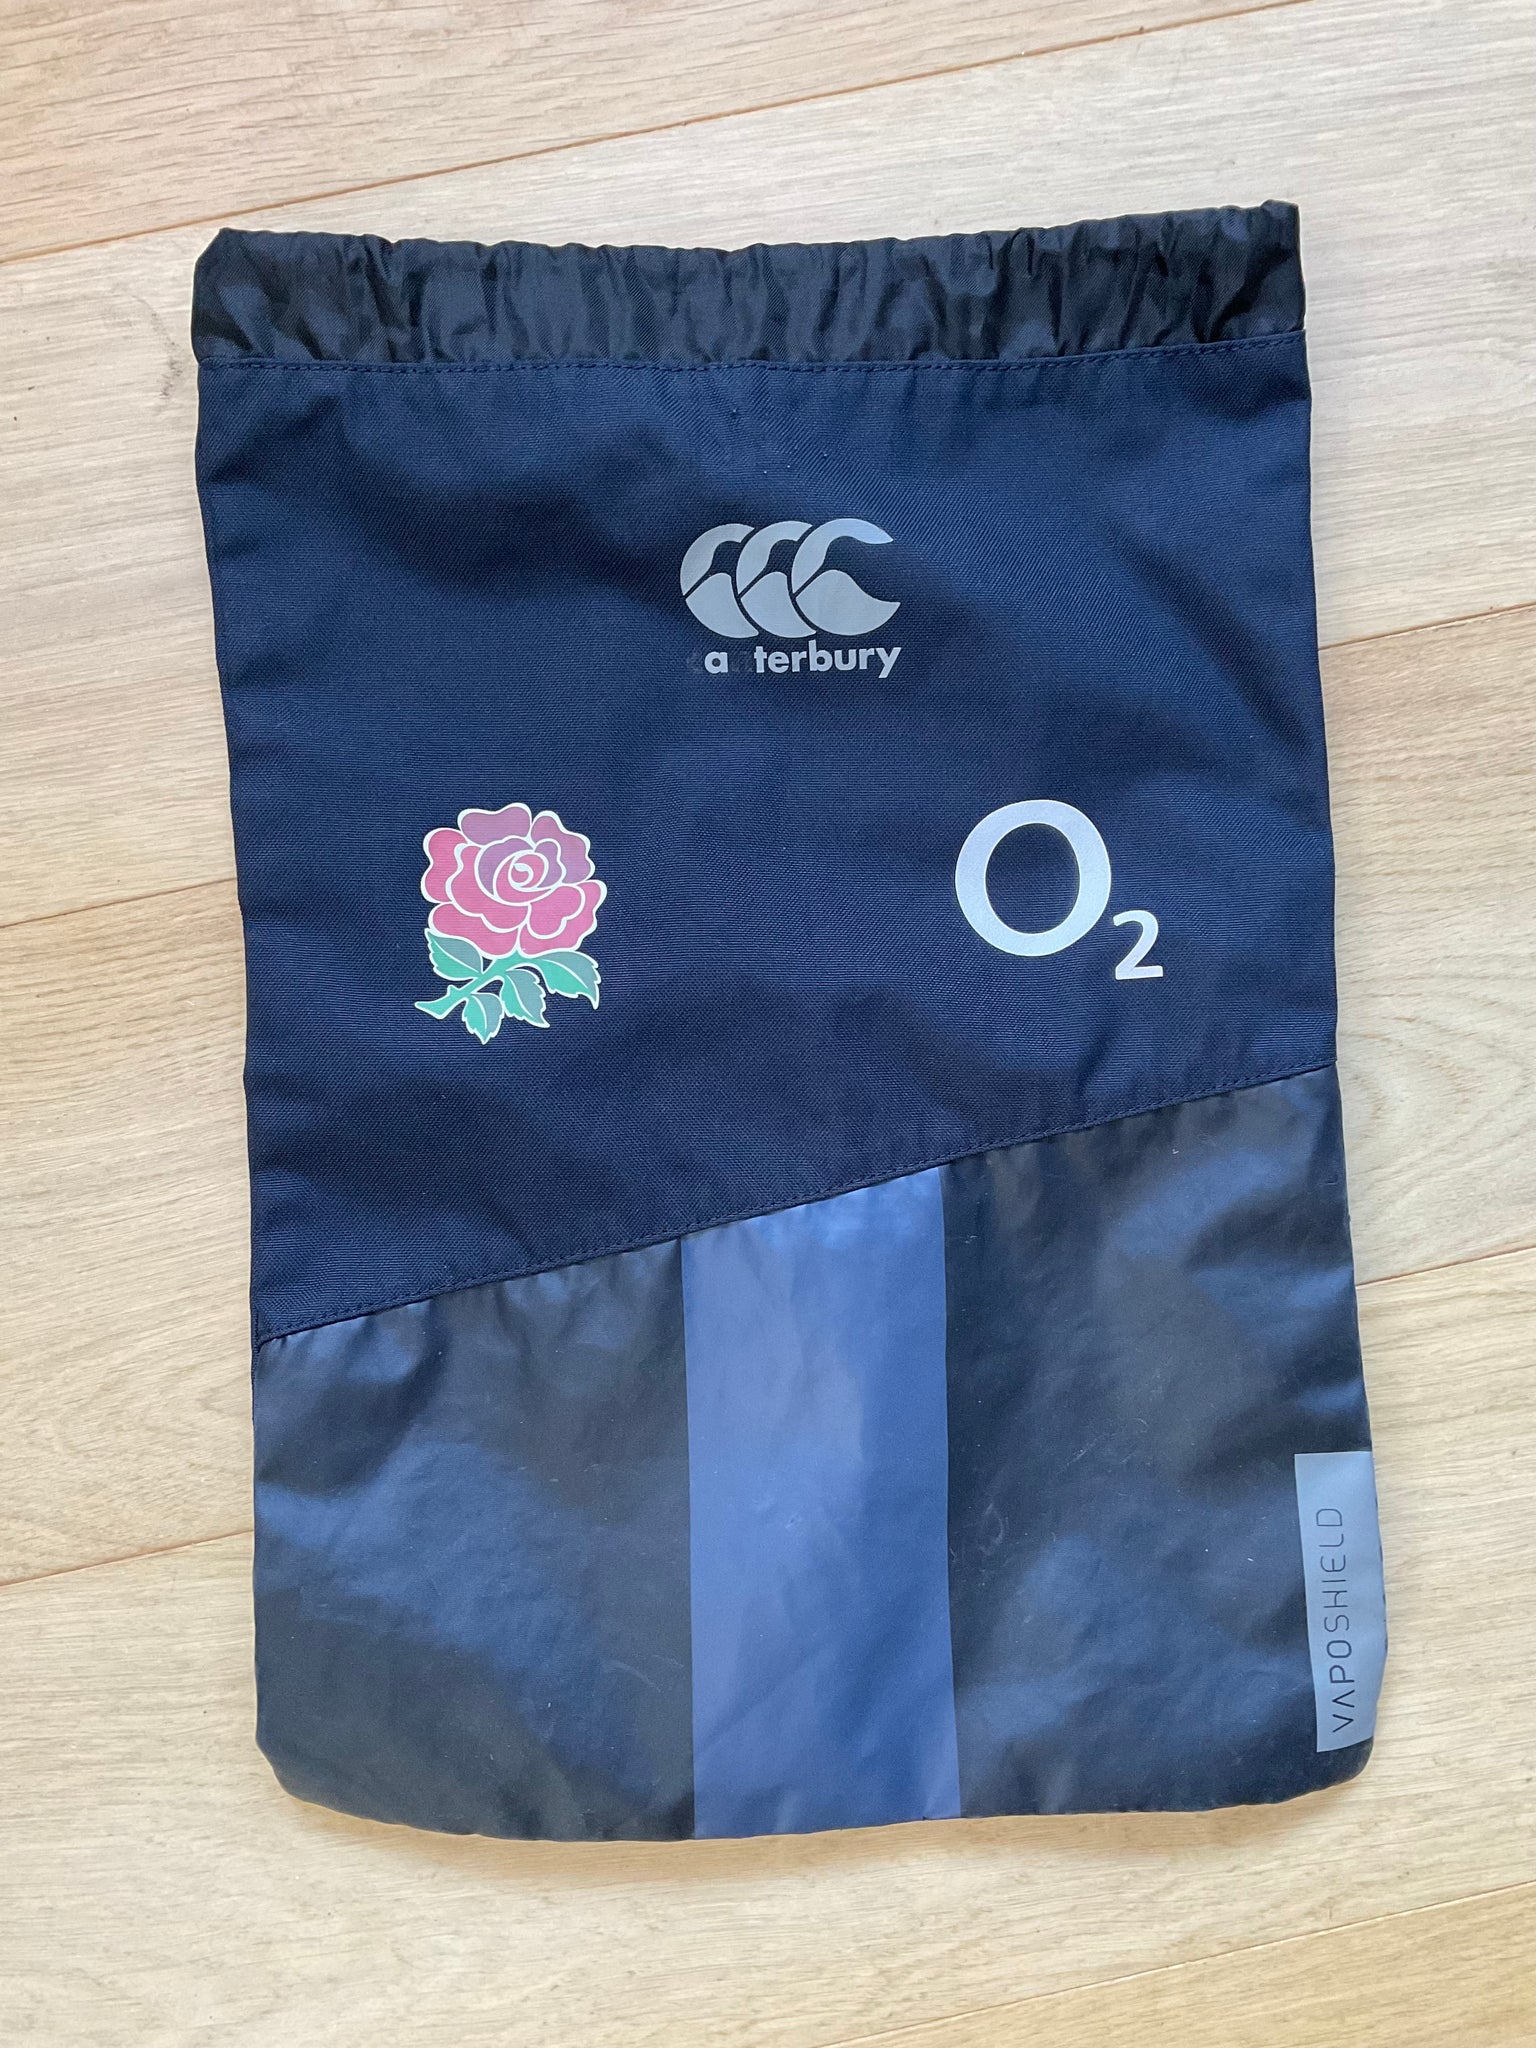 England Rugby -  Gym Sack / Boot Bag [Blue & Black]